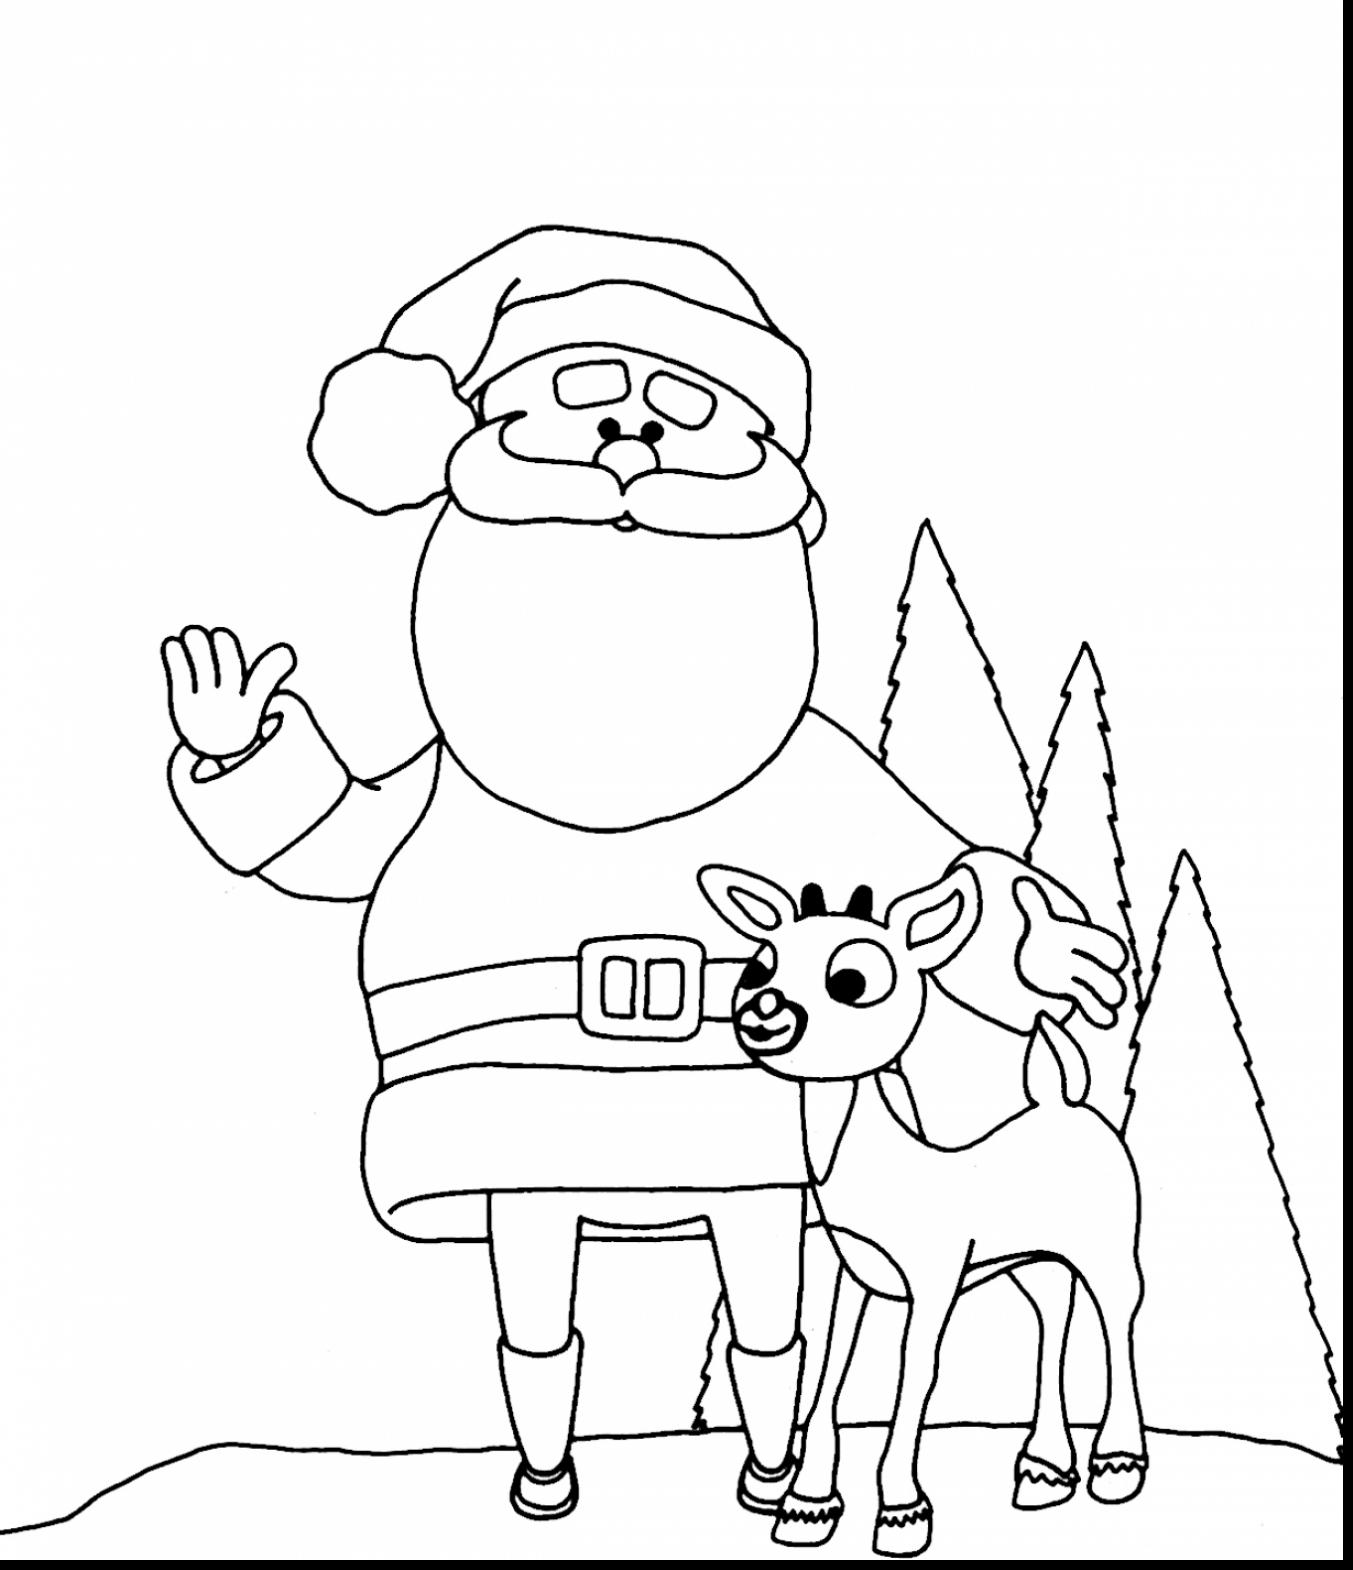 Reindeer Coloring Pages Free at Free printable